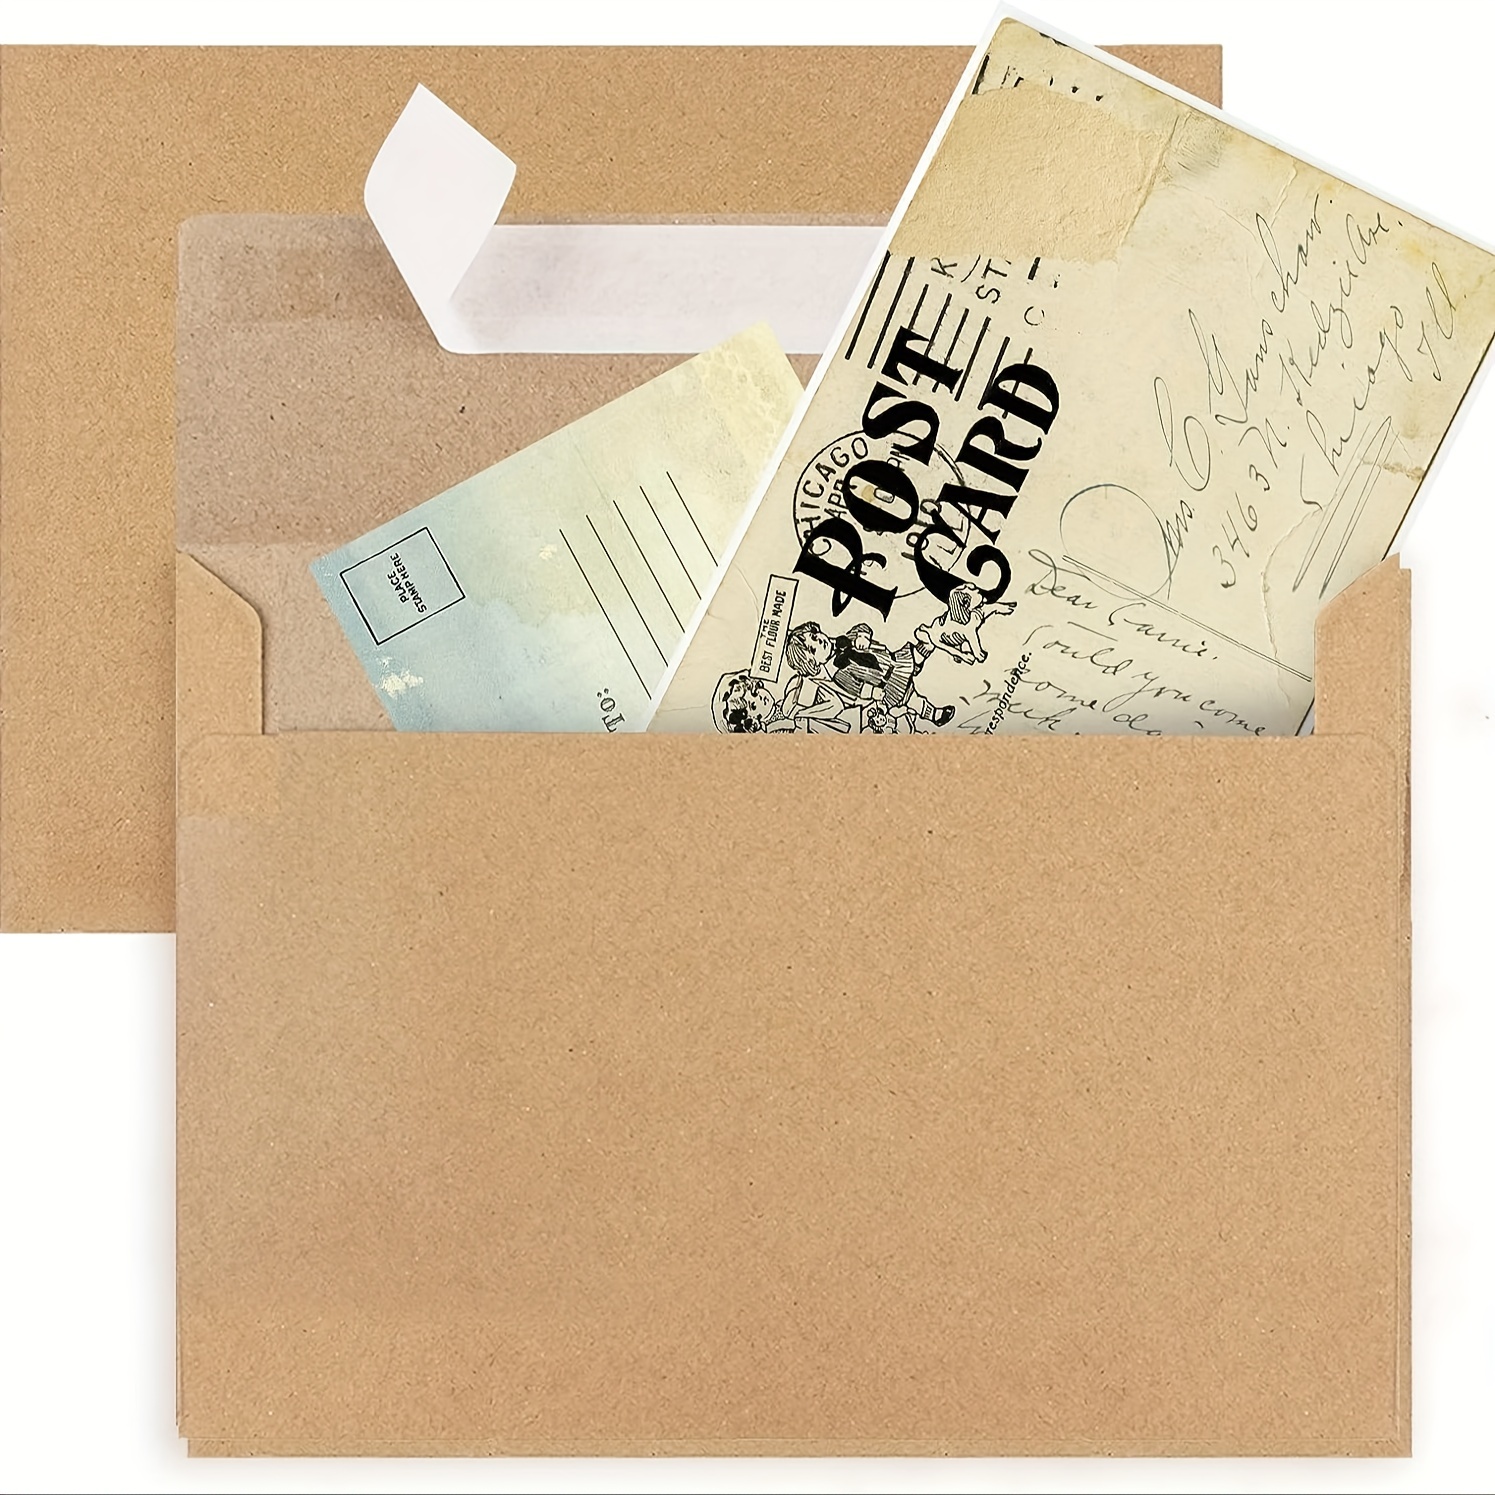 xflyxin 50 Pack Kraft Envelopes,A7 Envelopes,5x7 Envelopes for Invitations,Wedding, Baby Shower,Brown Kraft Envelopes for Personalize Gift Cards